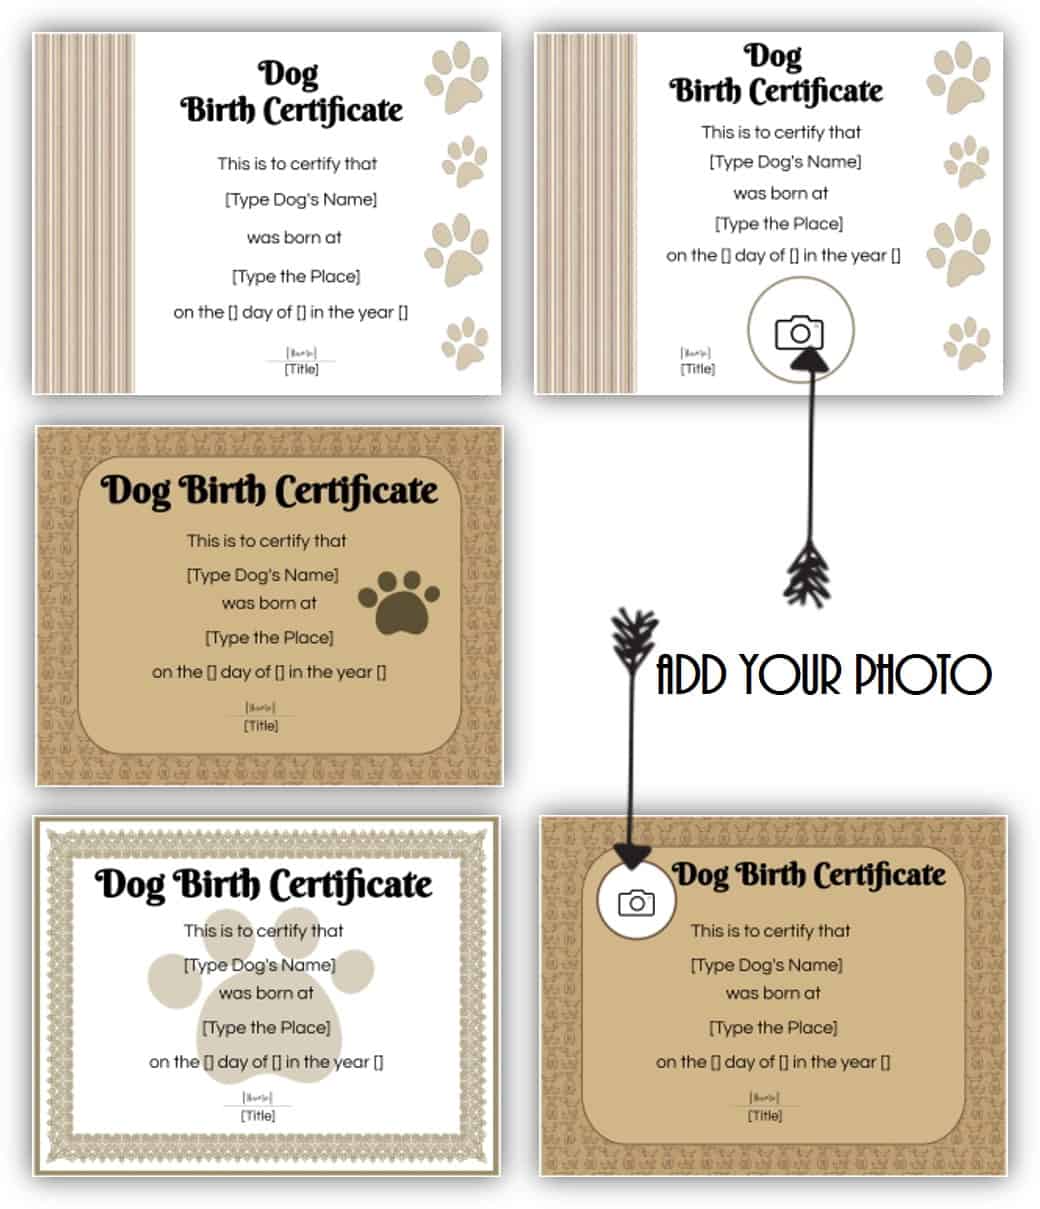 FREE Editable & Printable Dog Birth Certificate Dog Adoption Certificate